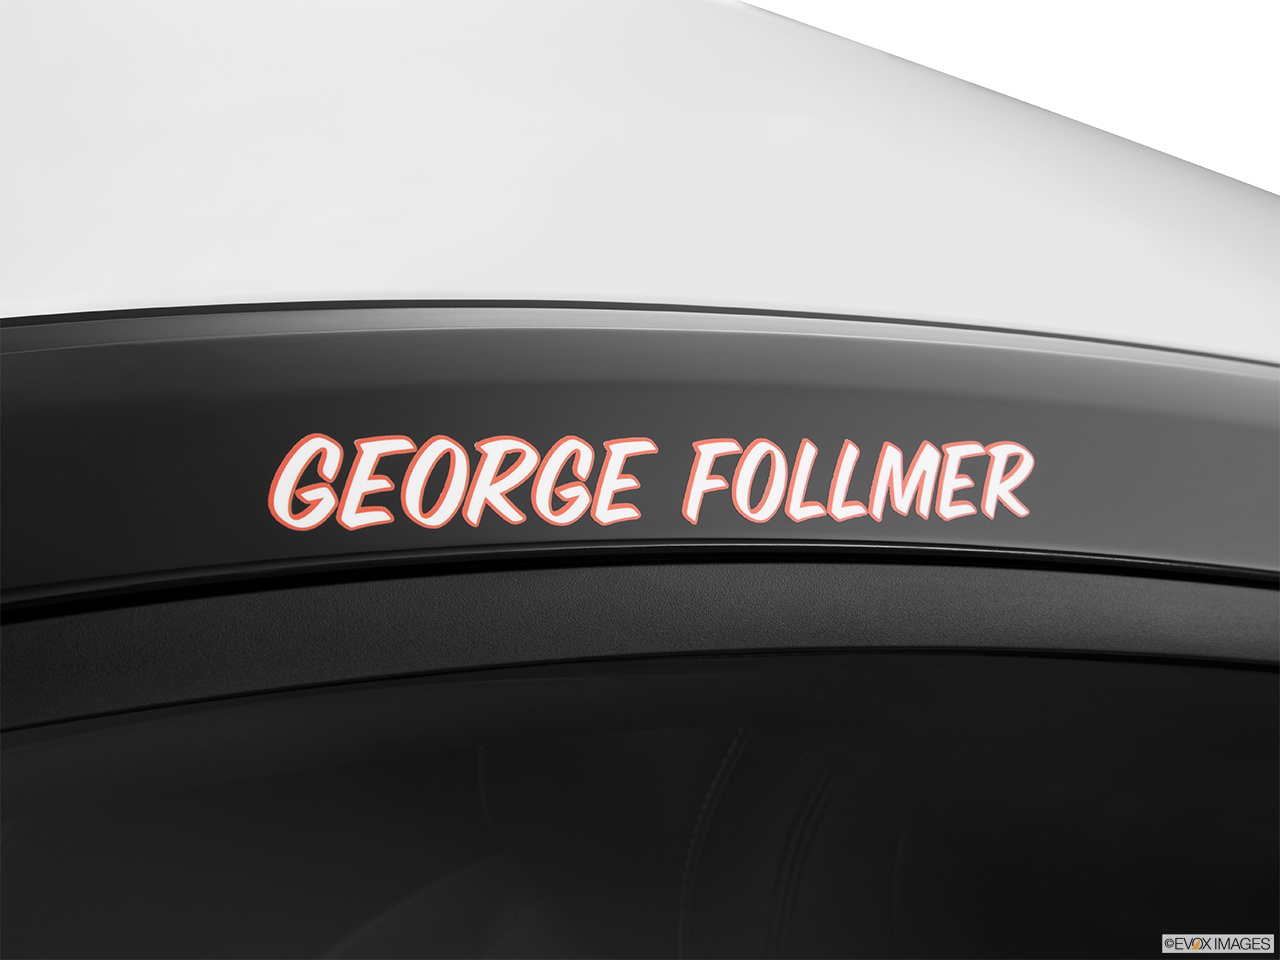 2014 Saleen George Follmer Mustang Base Exterior Bonus Shots (no set spec) 